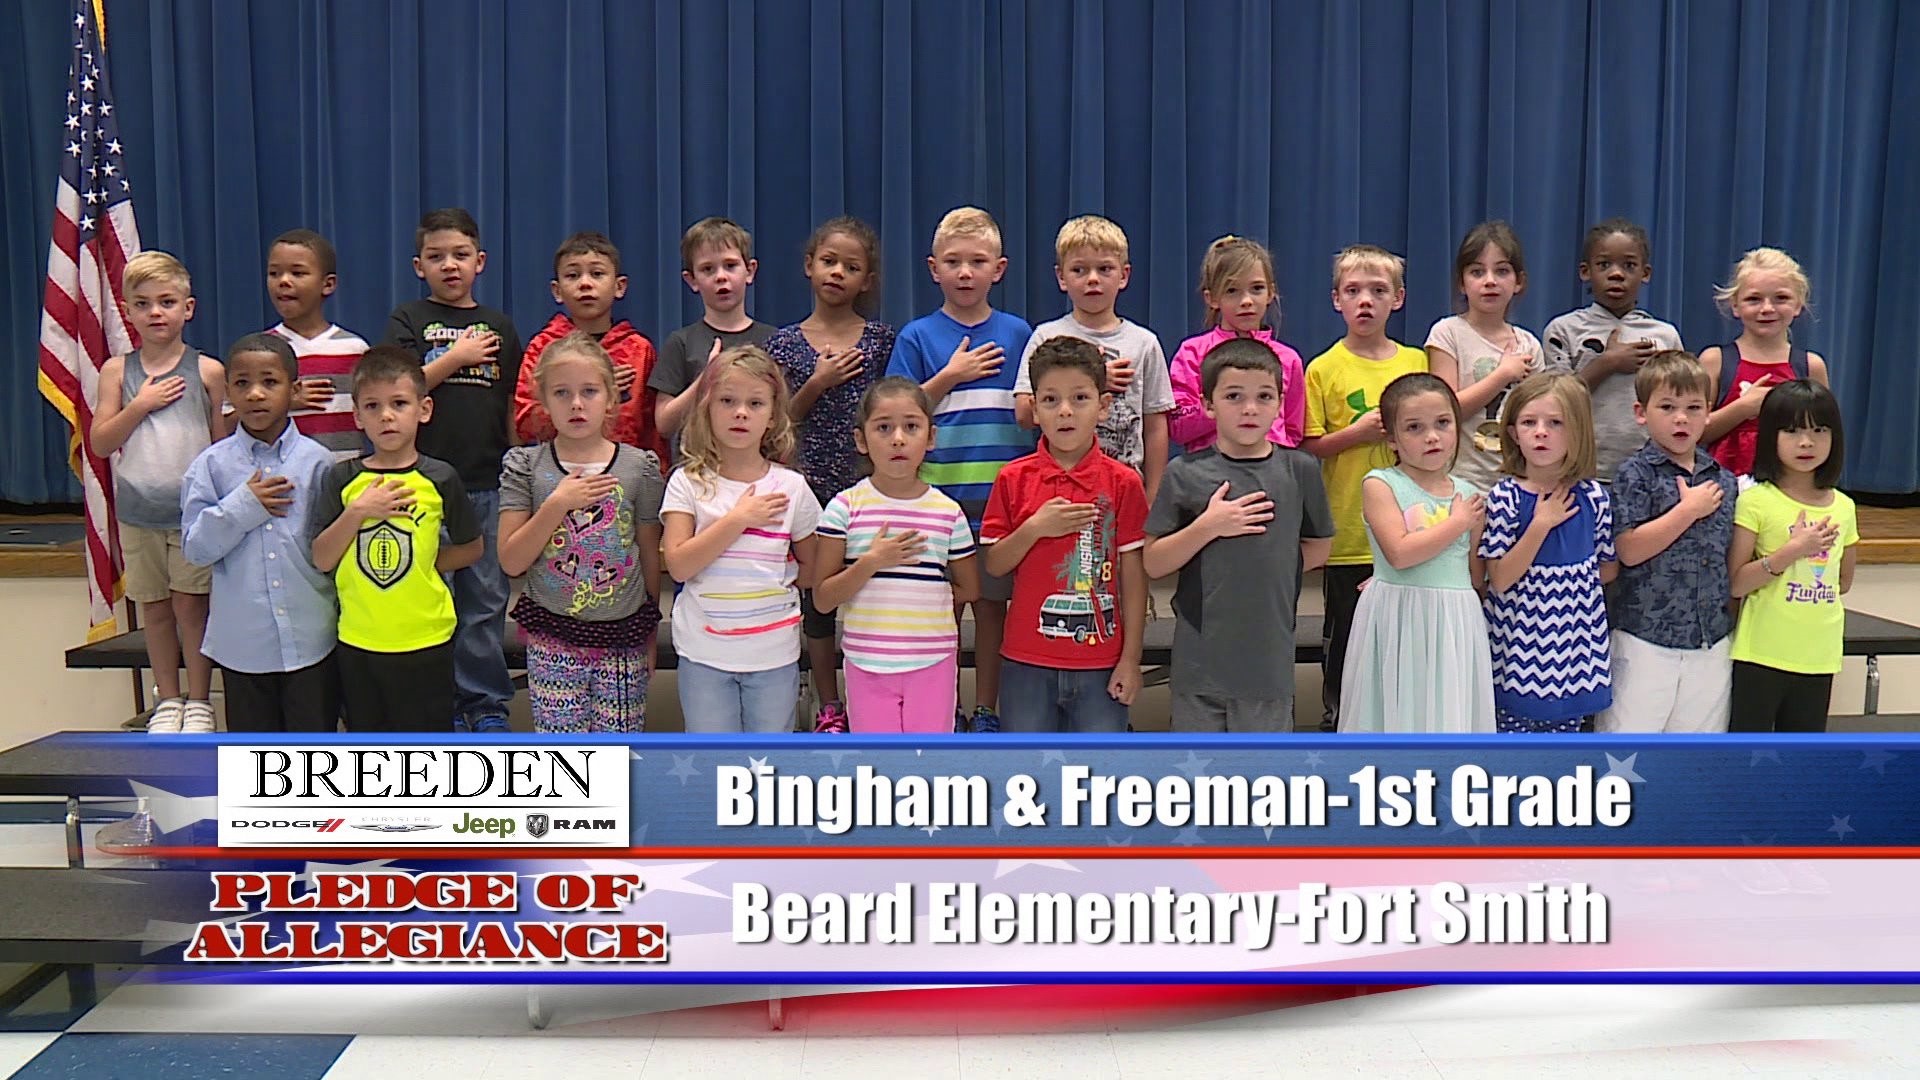 Bingham & Freeman  1st Grade  Beard Elementary  Fort Smith